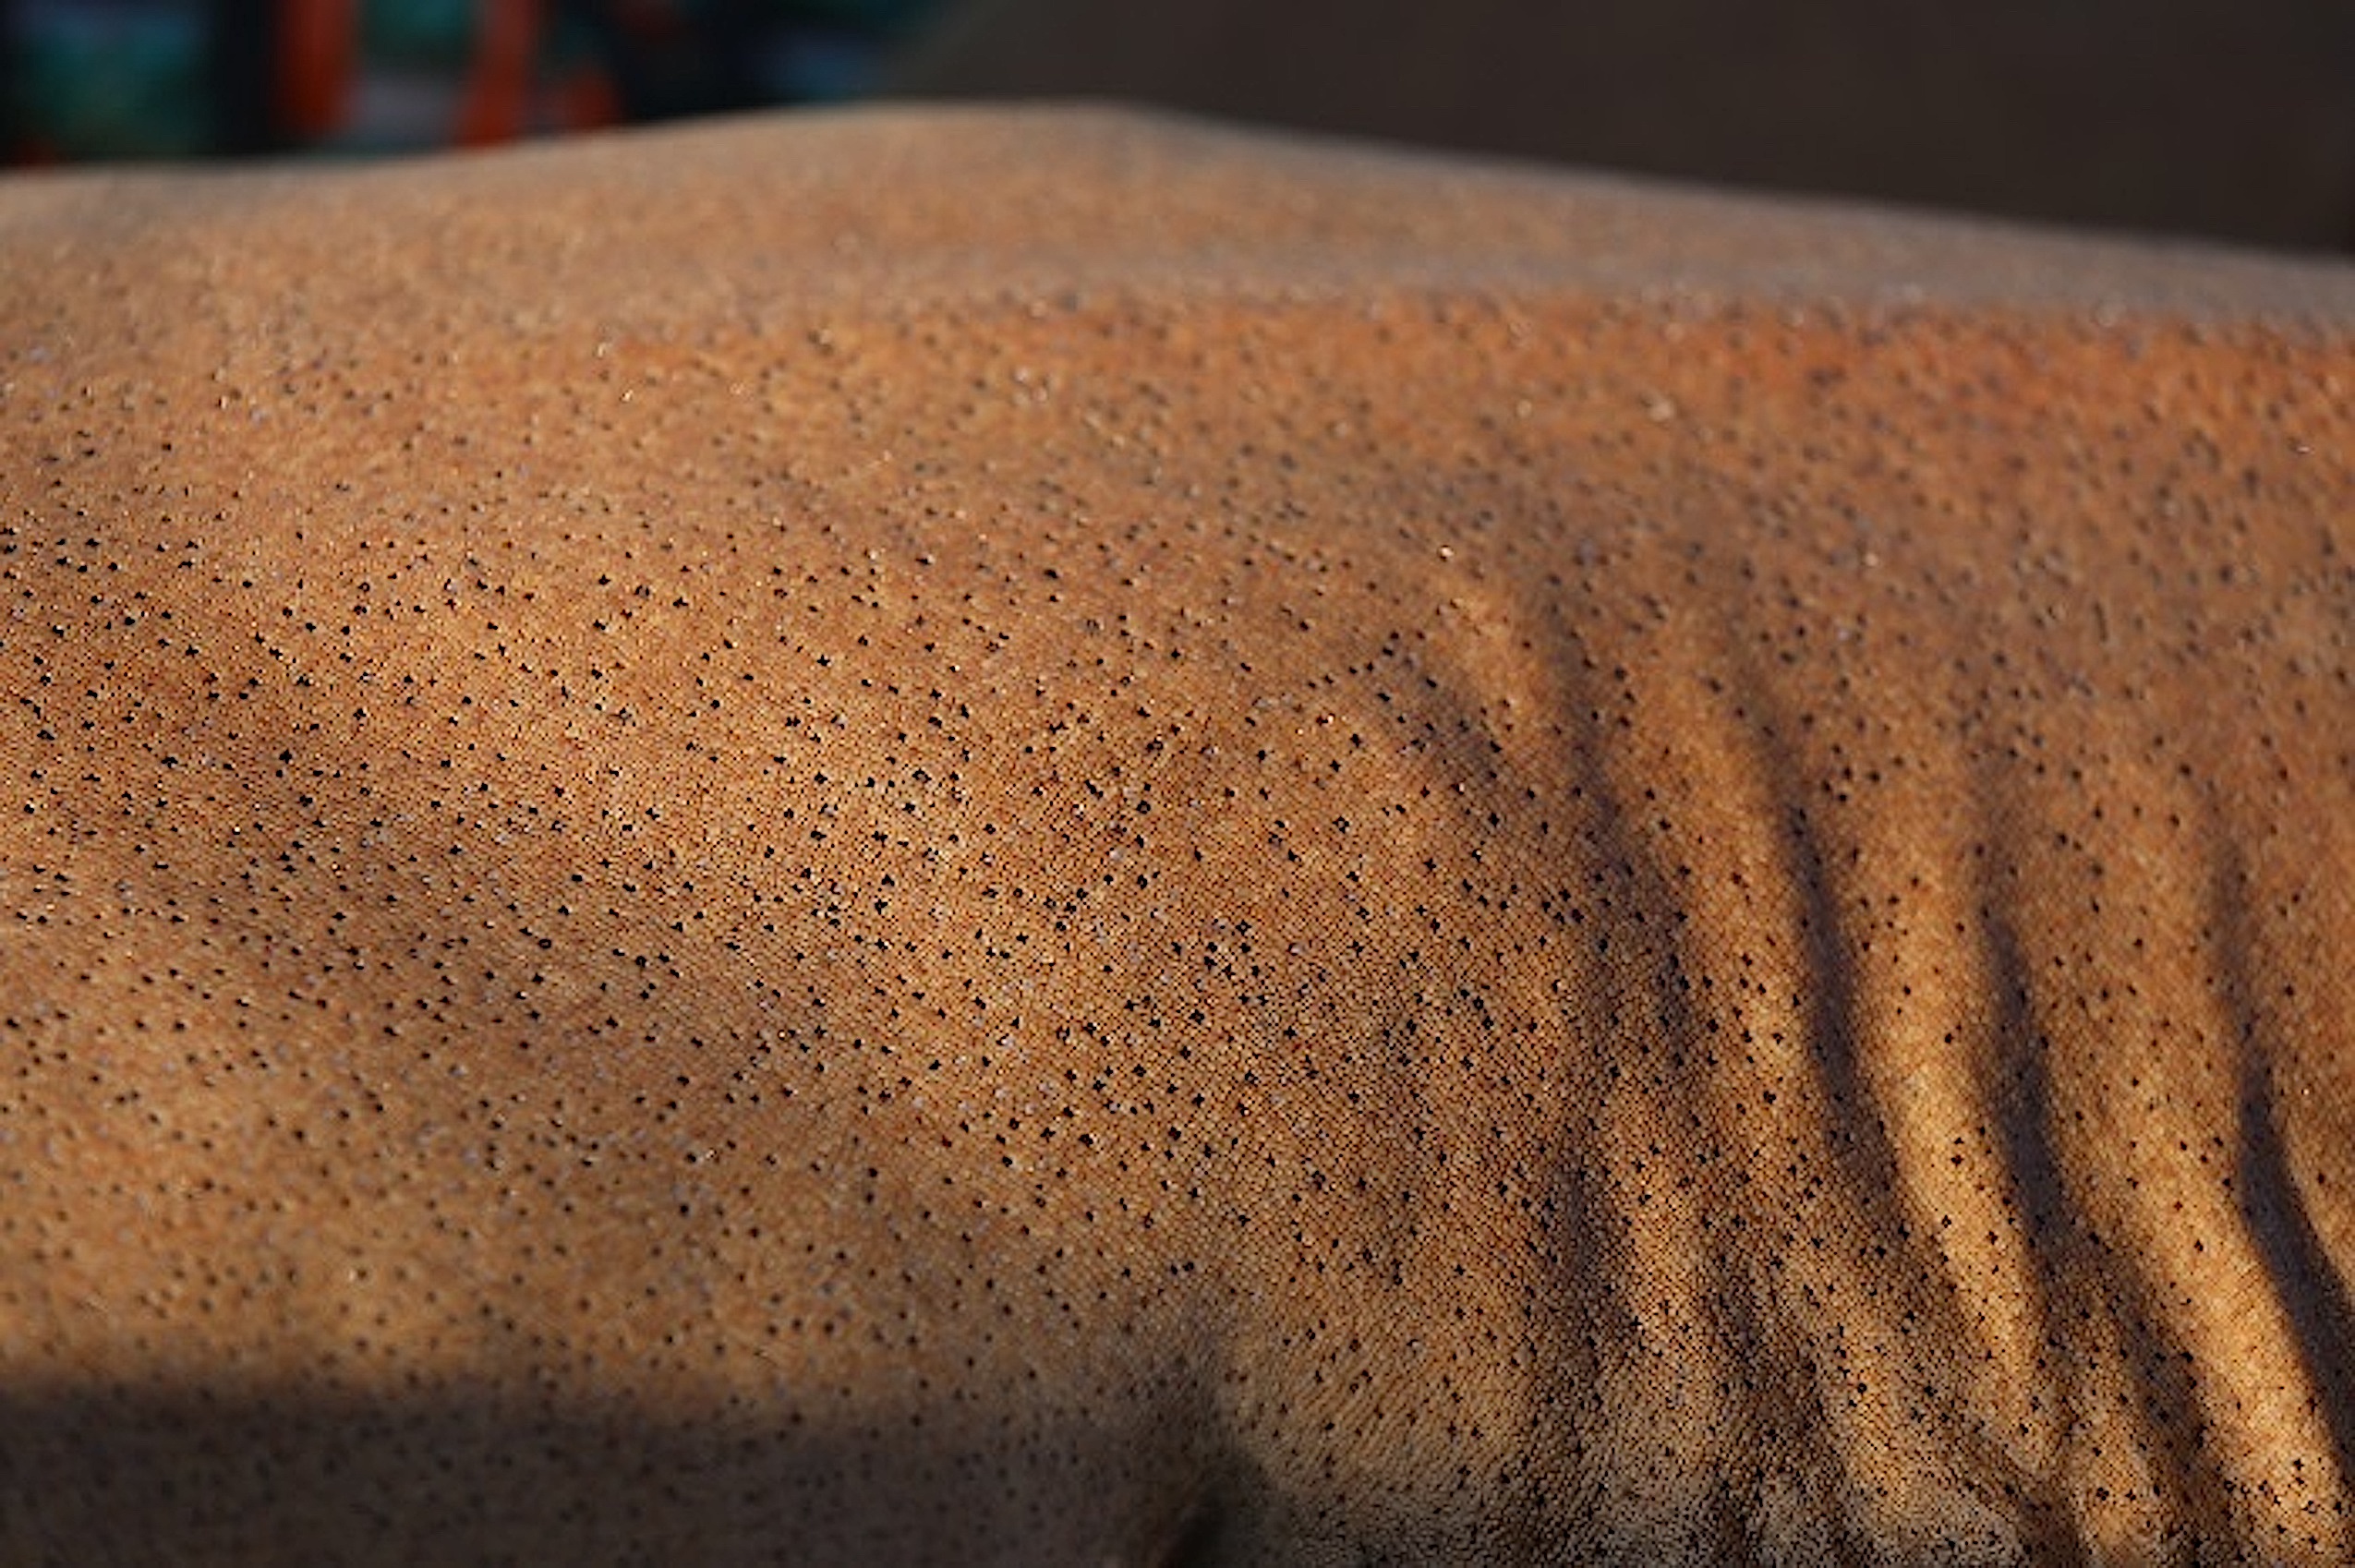 The sandpaper skin of a sandbar shark, courtesy of NOAA